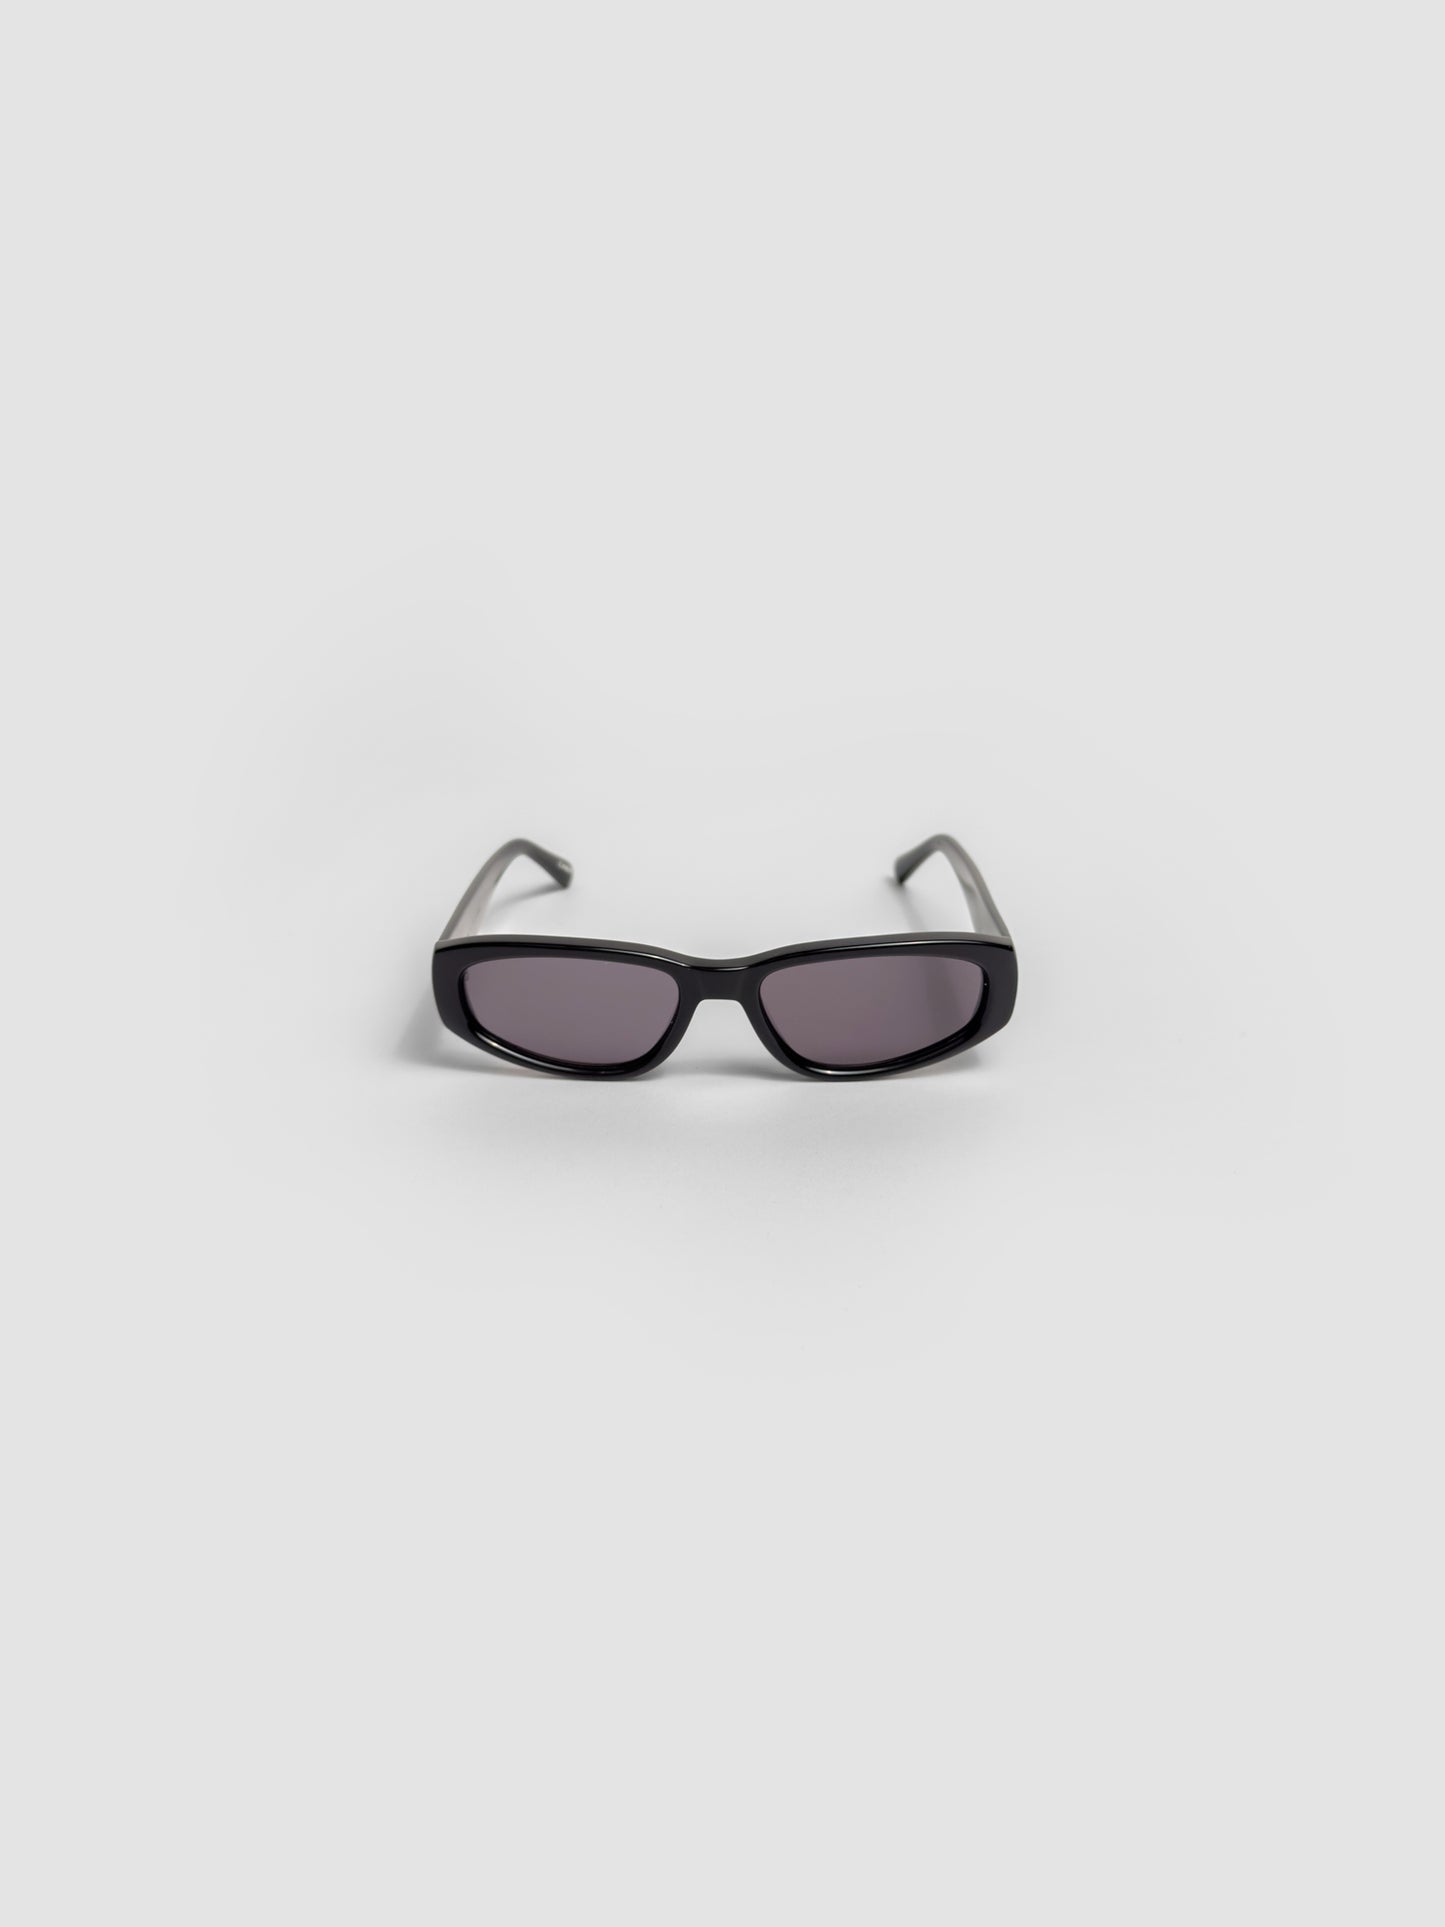 Sunglasses 09.2